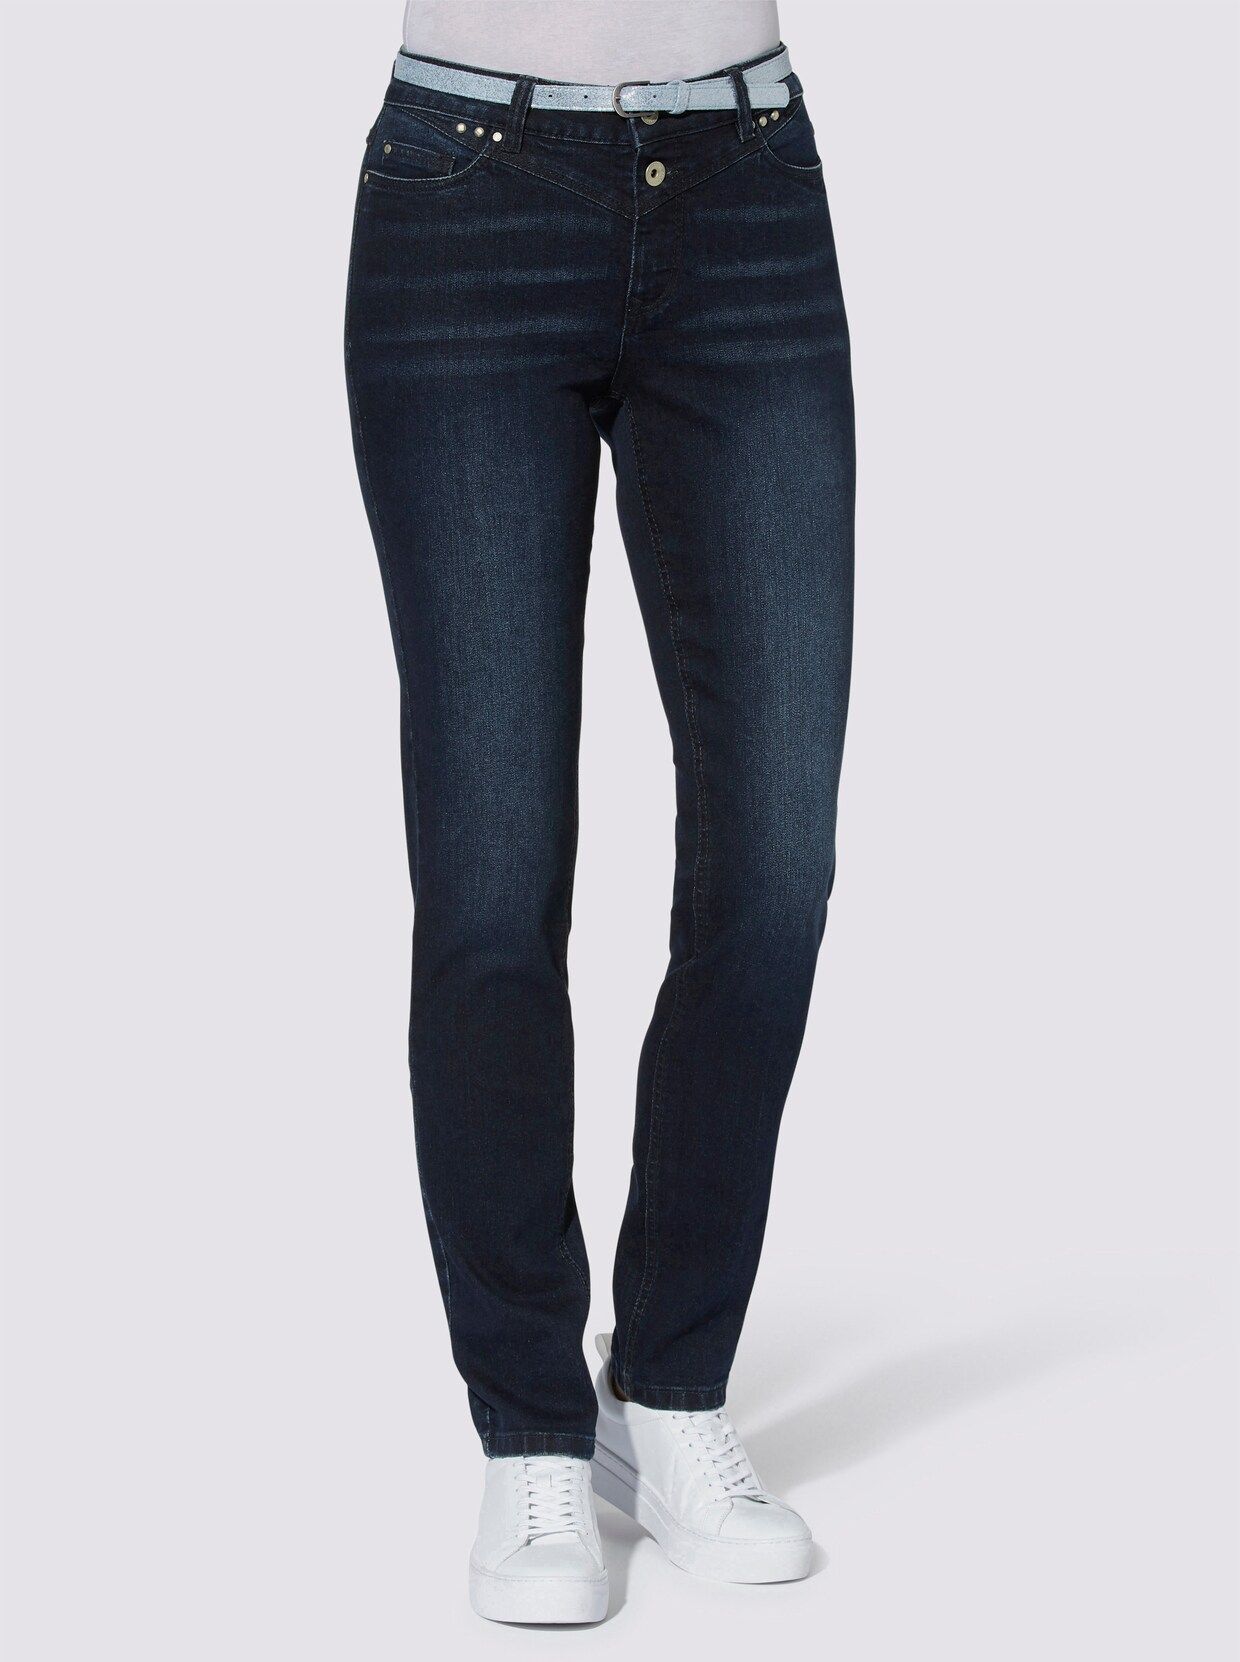 5-pocket jeans - dark-blue